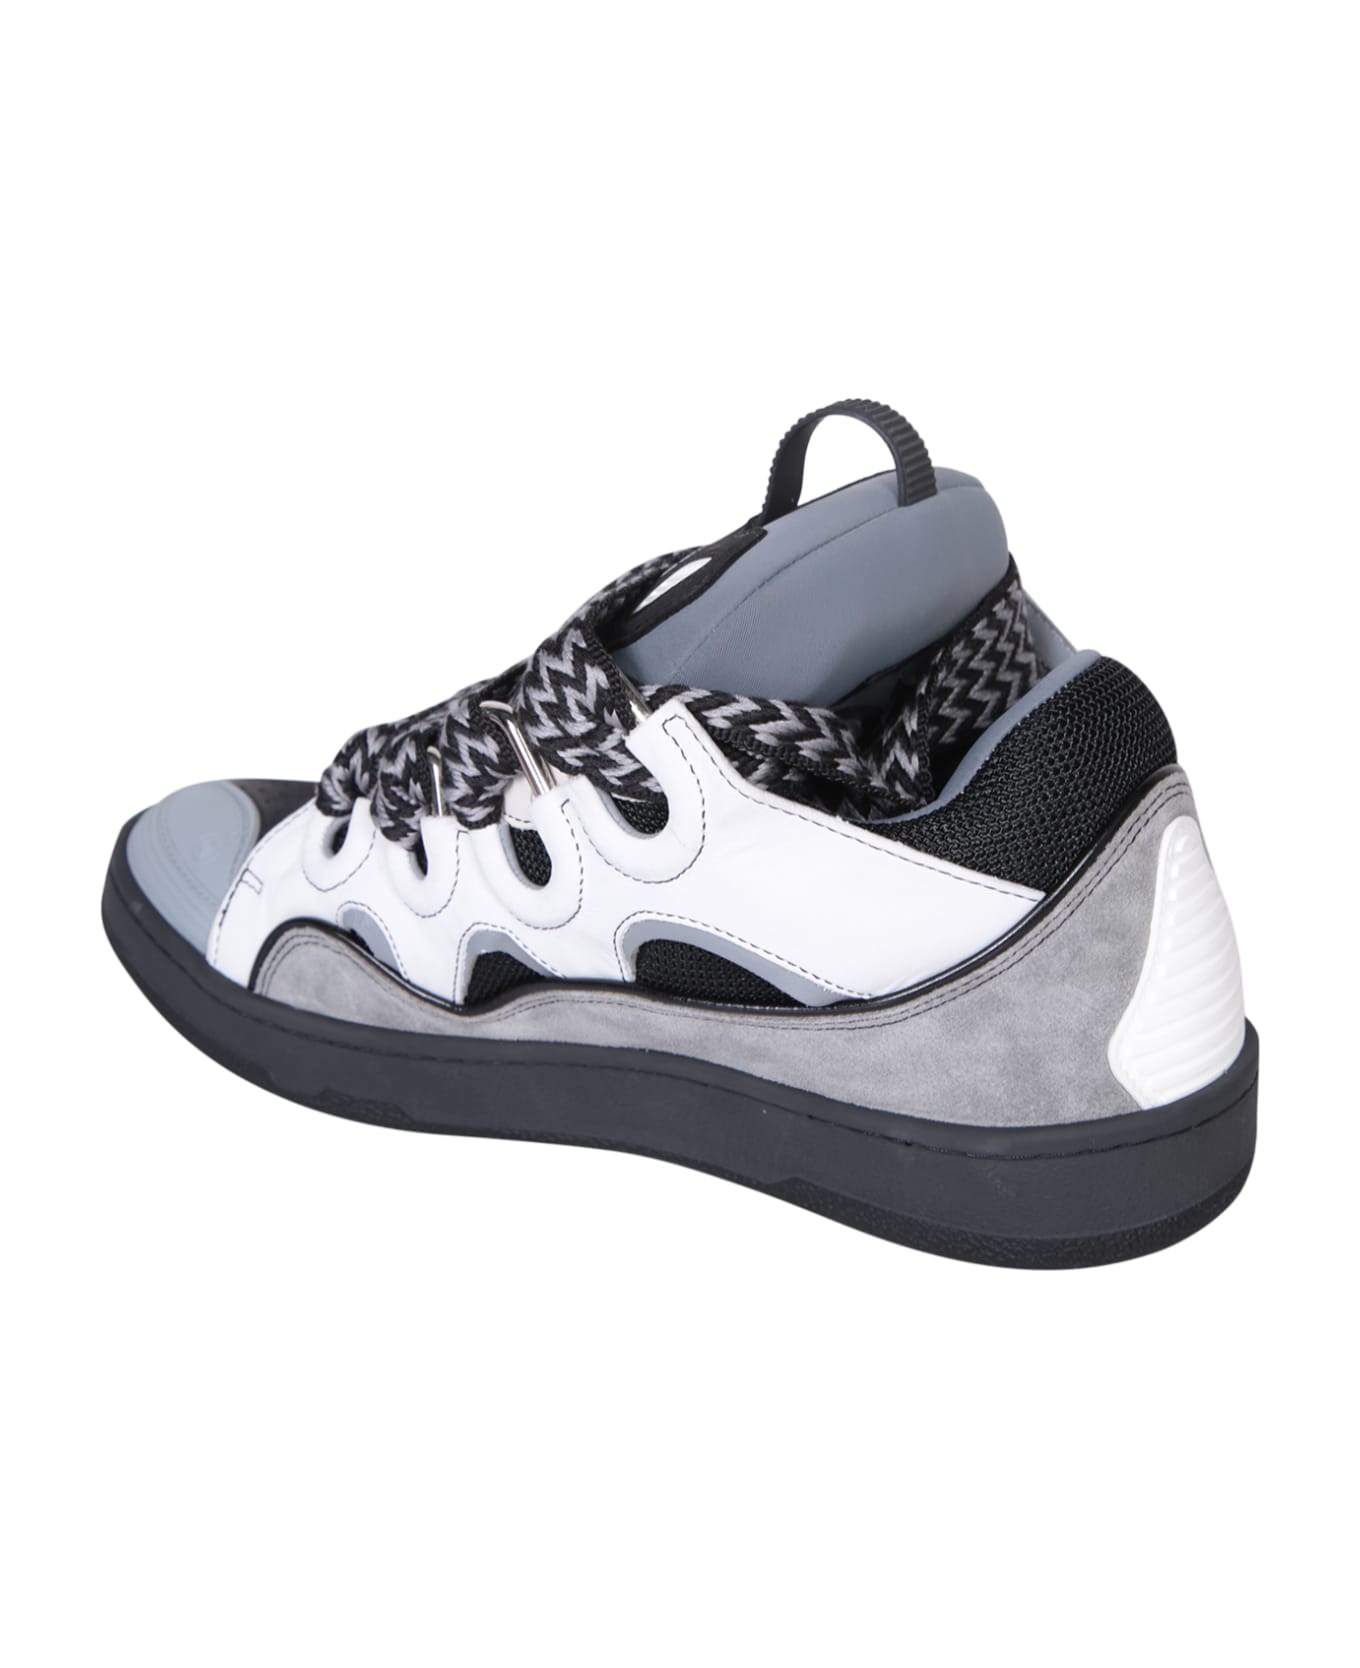 Lanvin Curb White/grey Sneakers - Grey